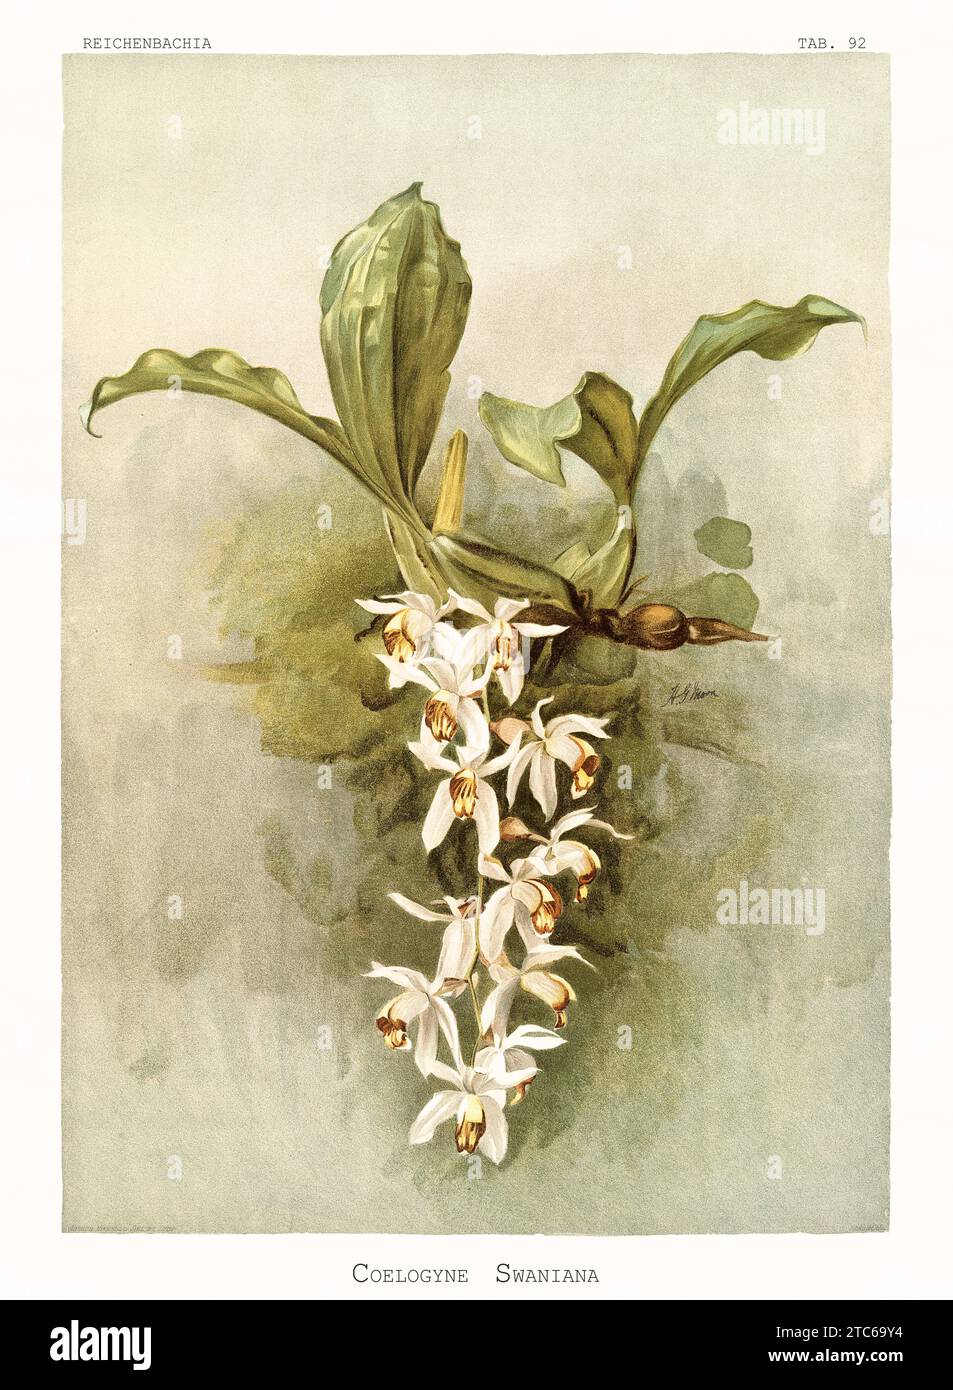 Old illustration of  Swain's Coelogyne (Coelogyne swaniana). Reichenbachia, by F. Sander. St. Albans, UK, 1888 - 1894 Stock Photo